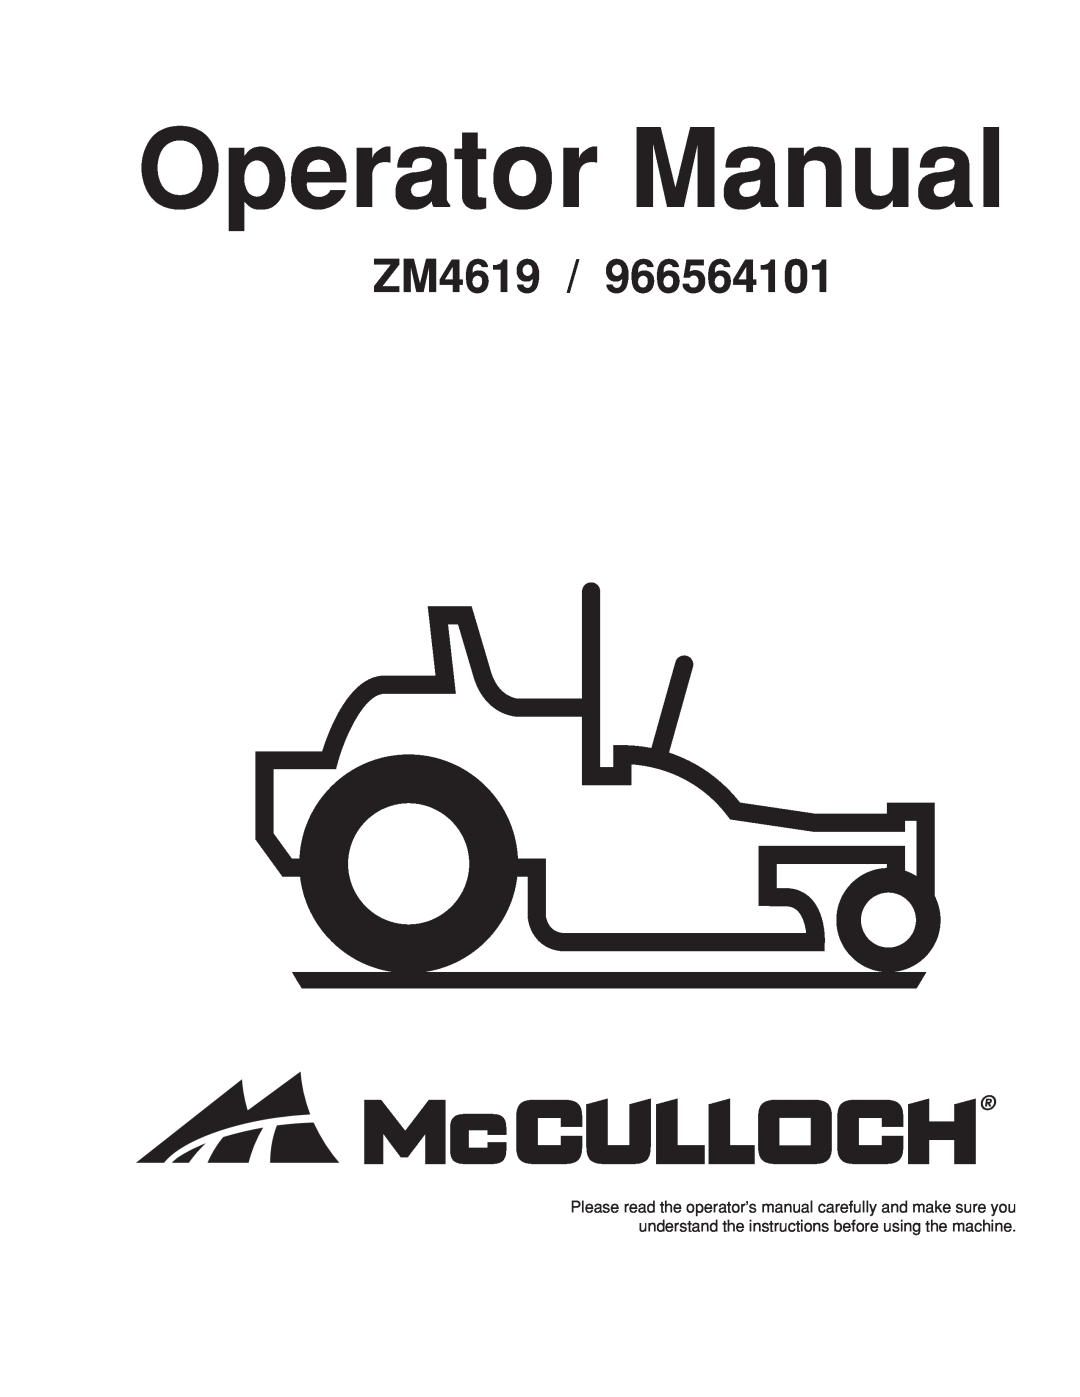 McCulloch 966564101 manual Operator Manual, ZM4619 